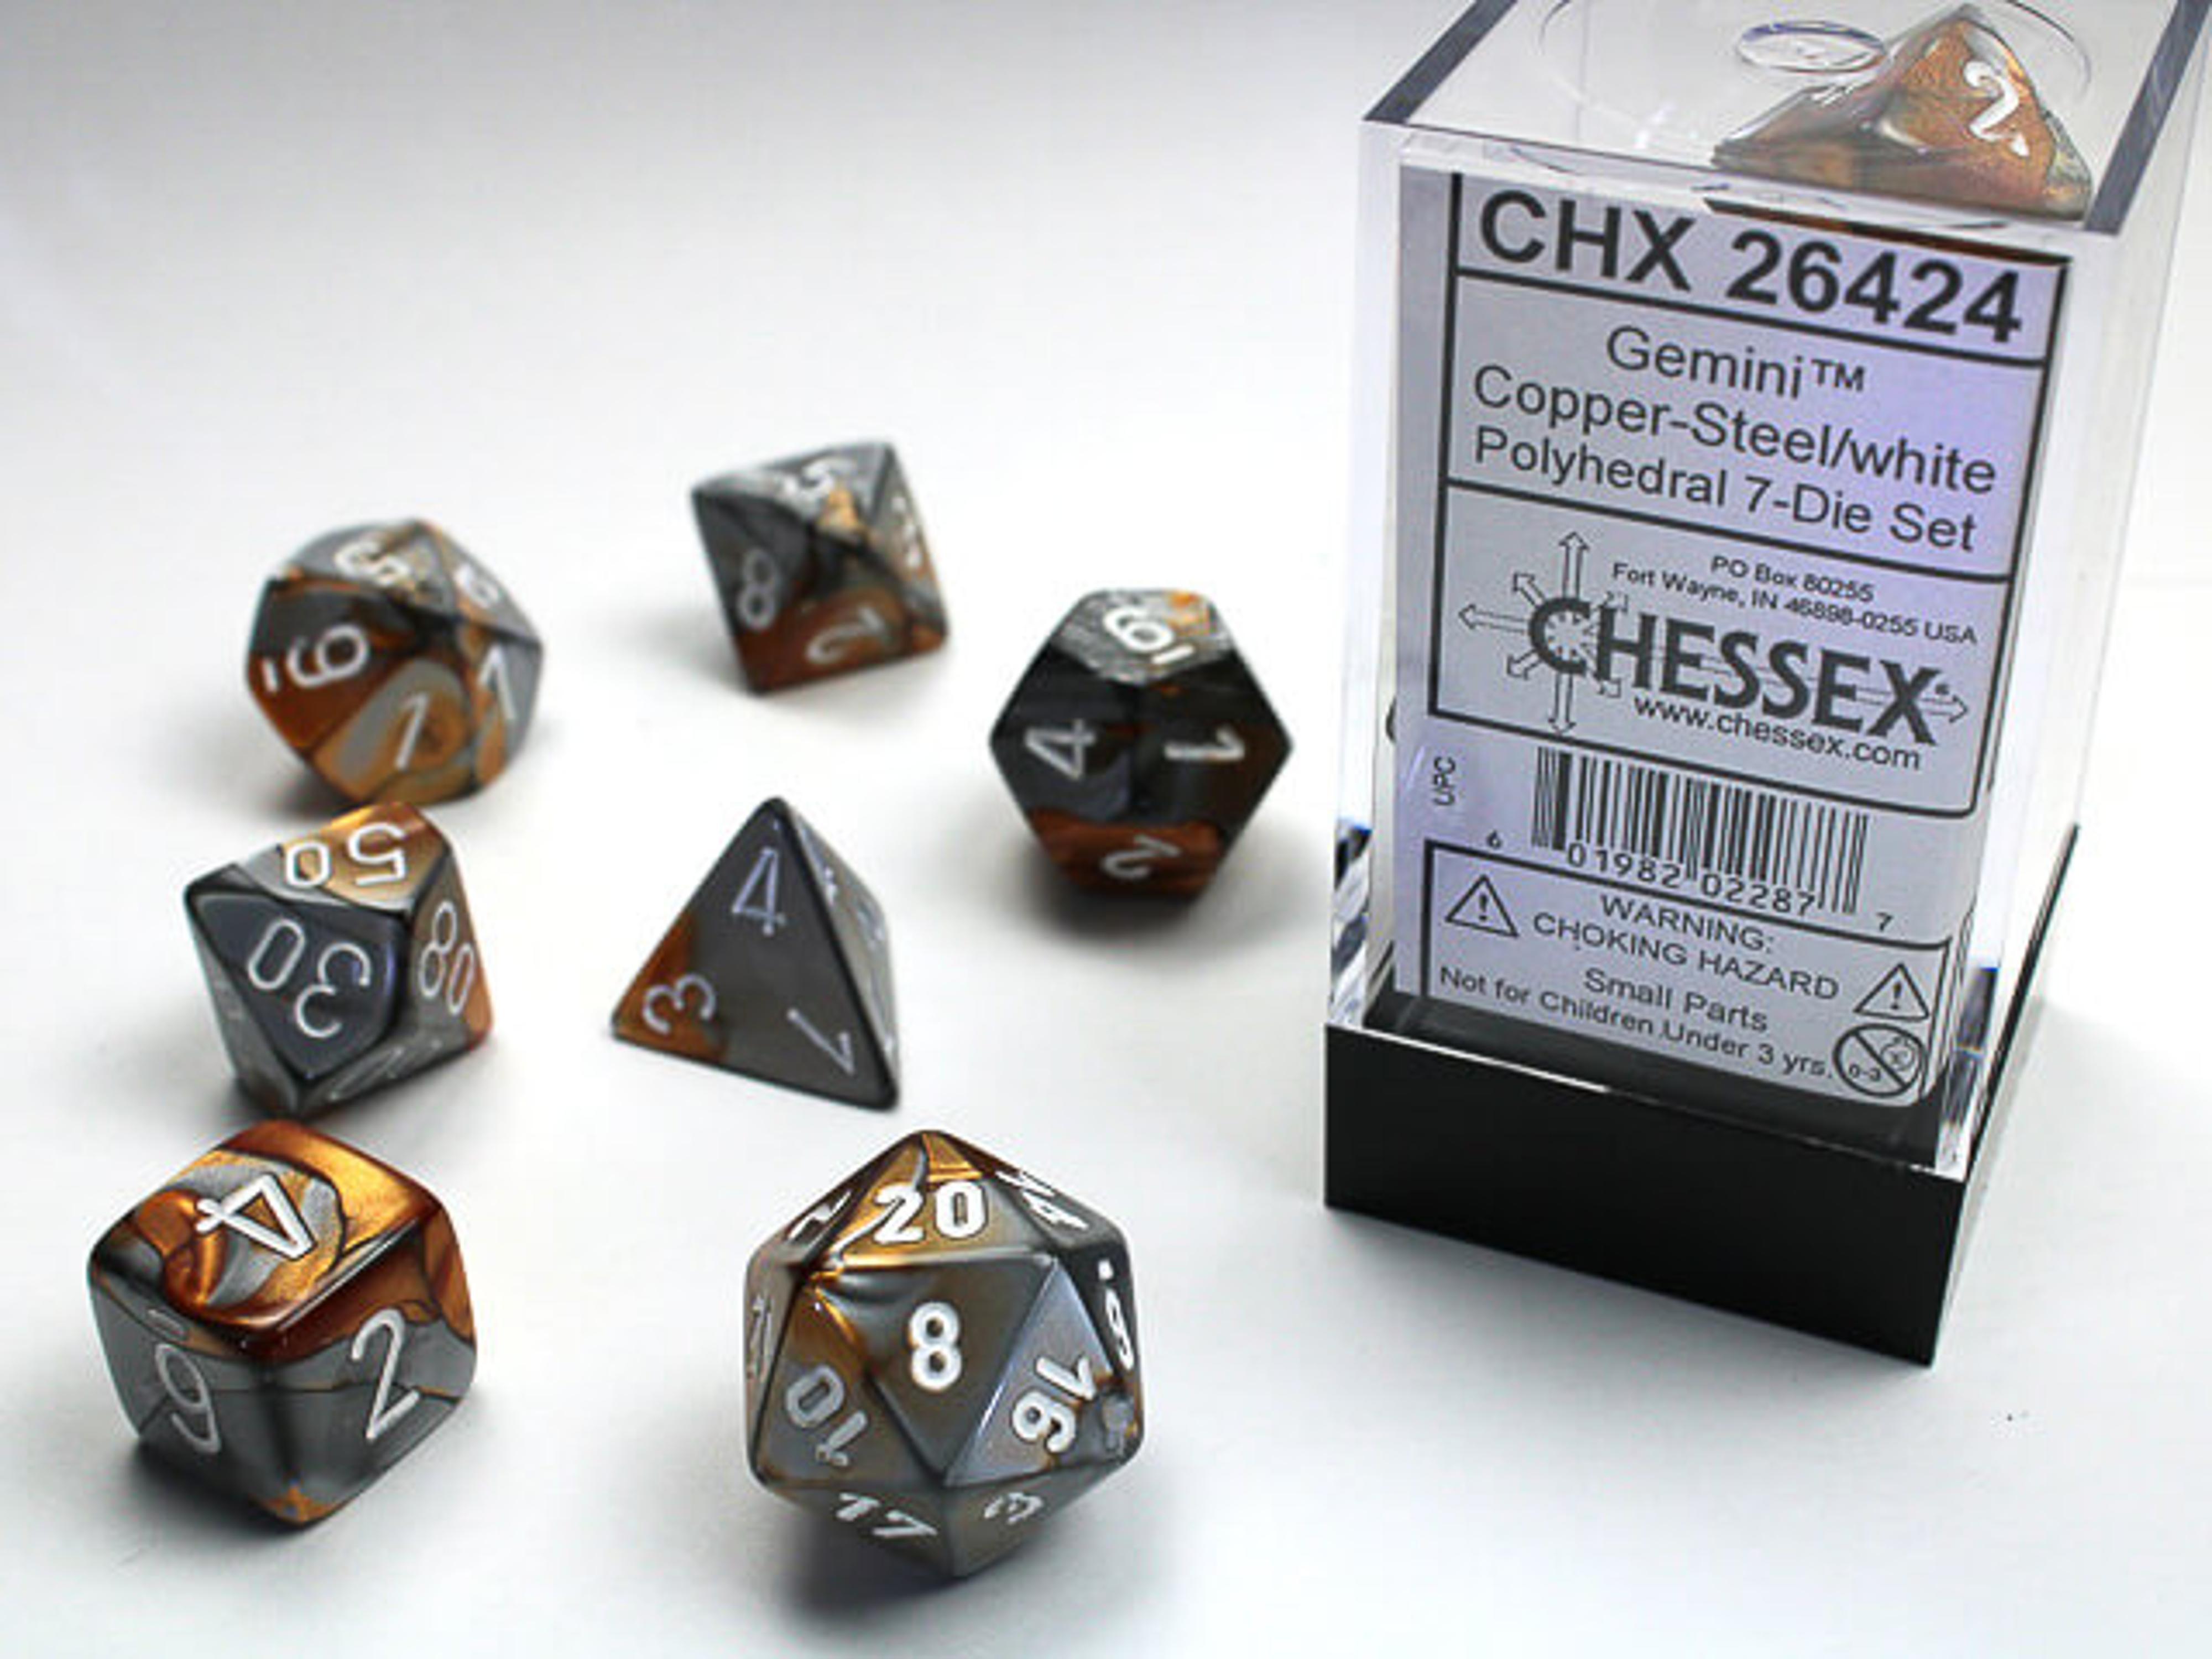 Chessex Gemini Polyhedral Copper-Steel/White 7 Die Set